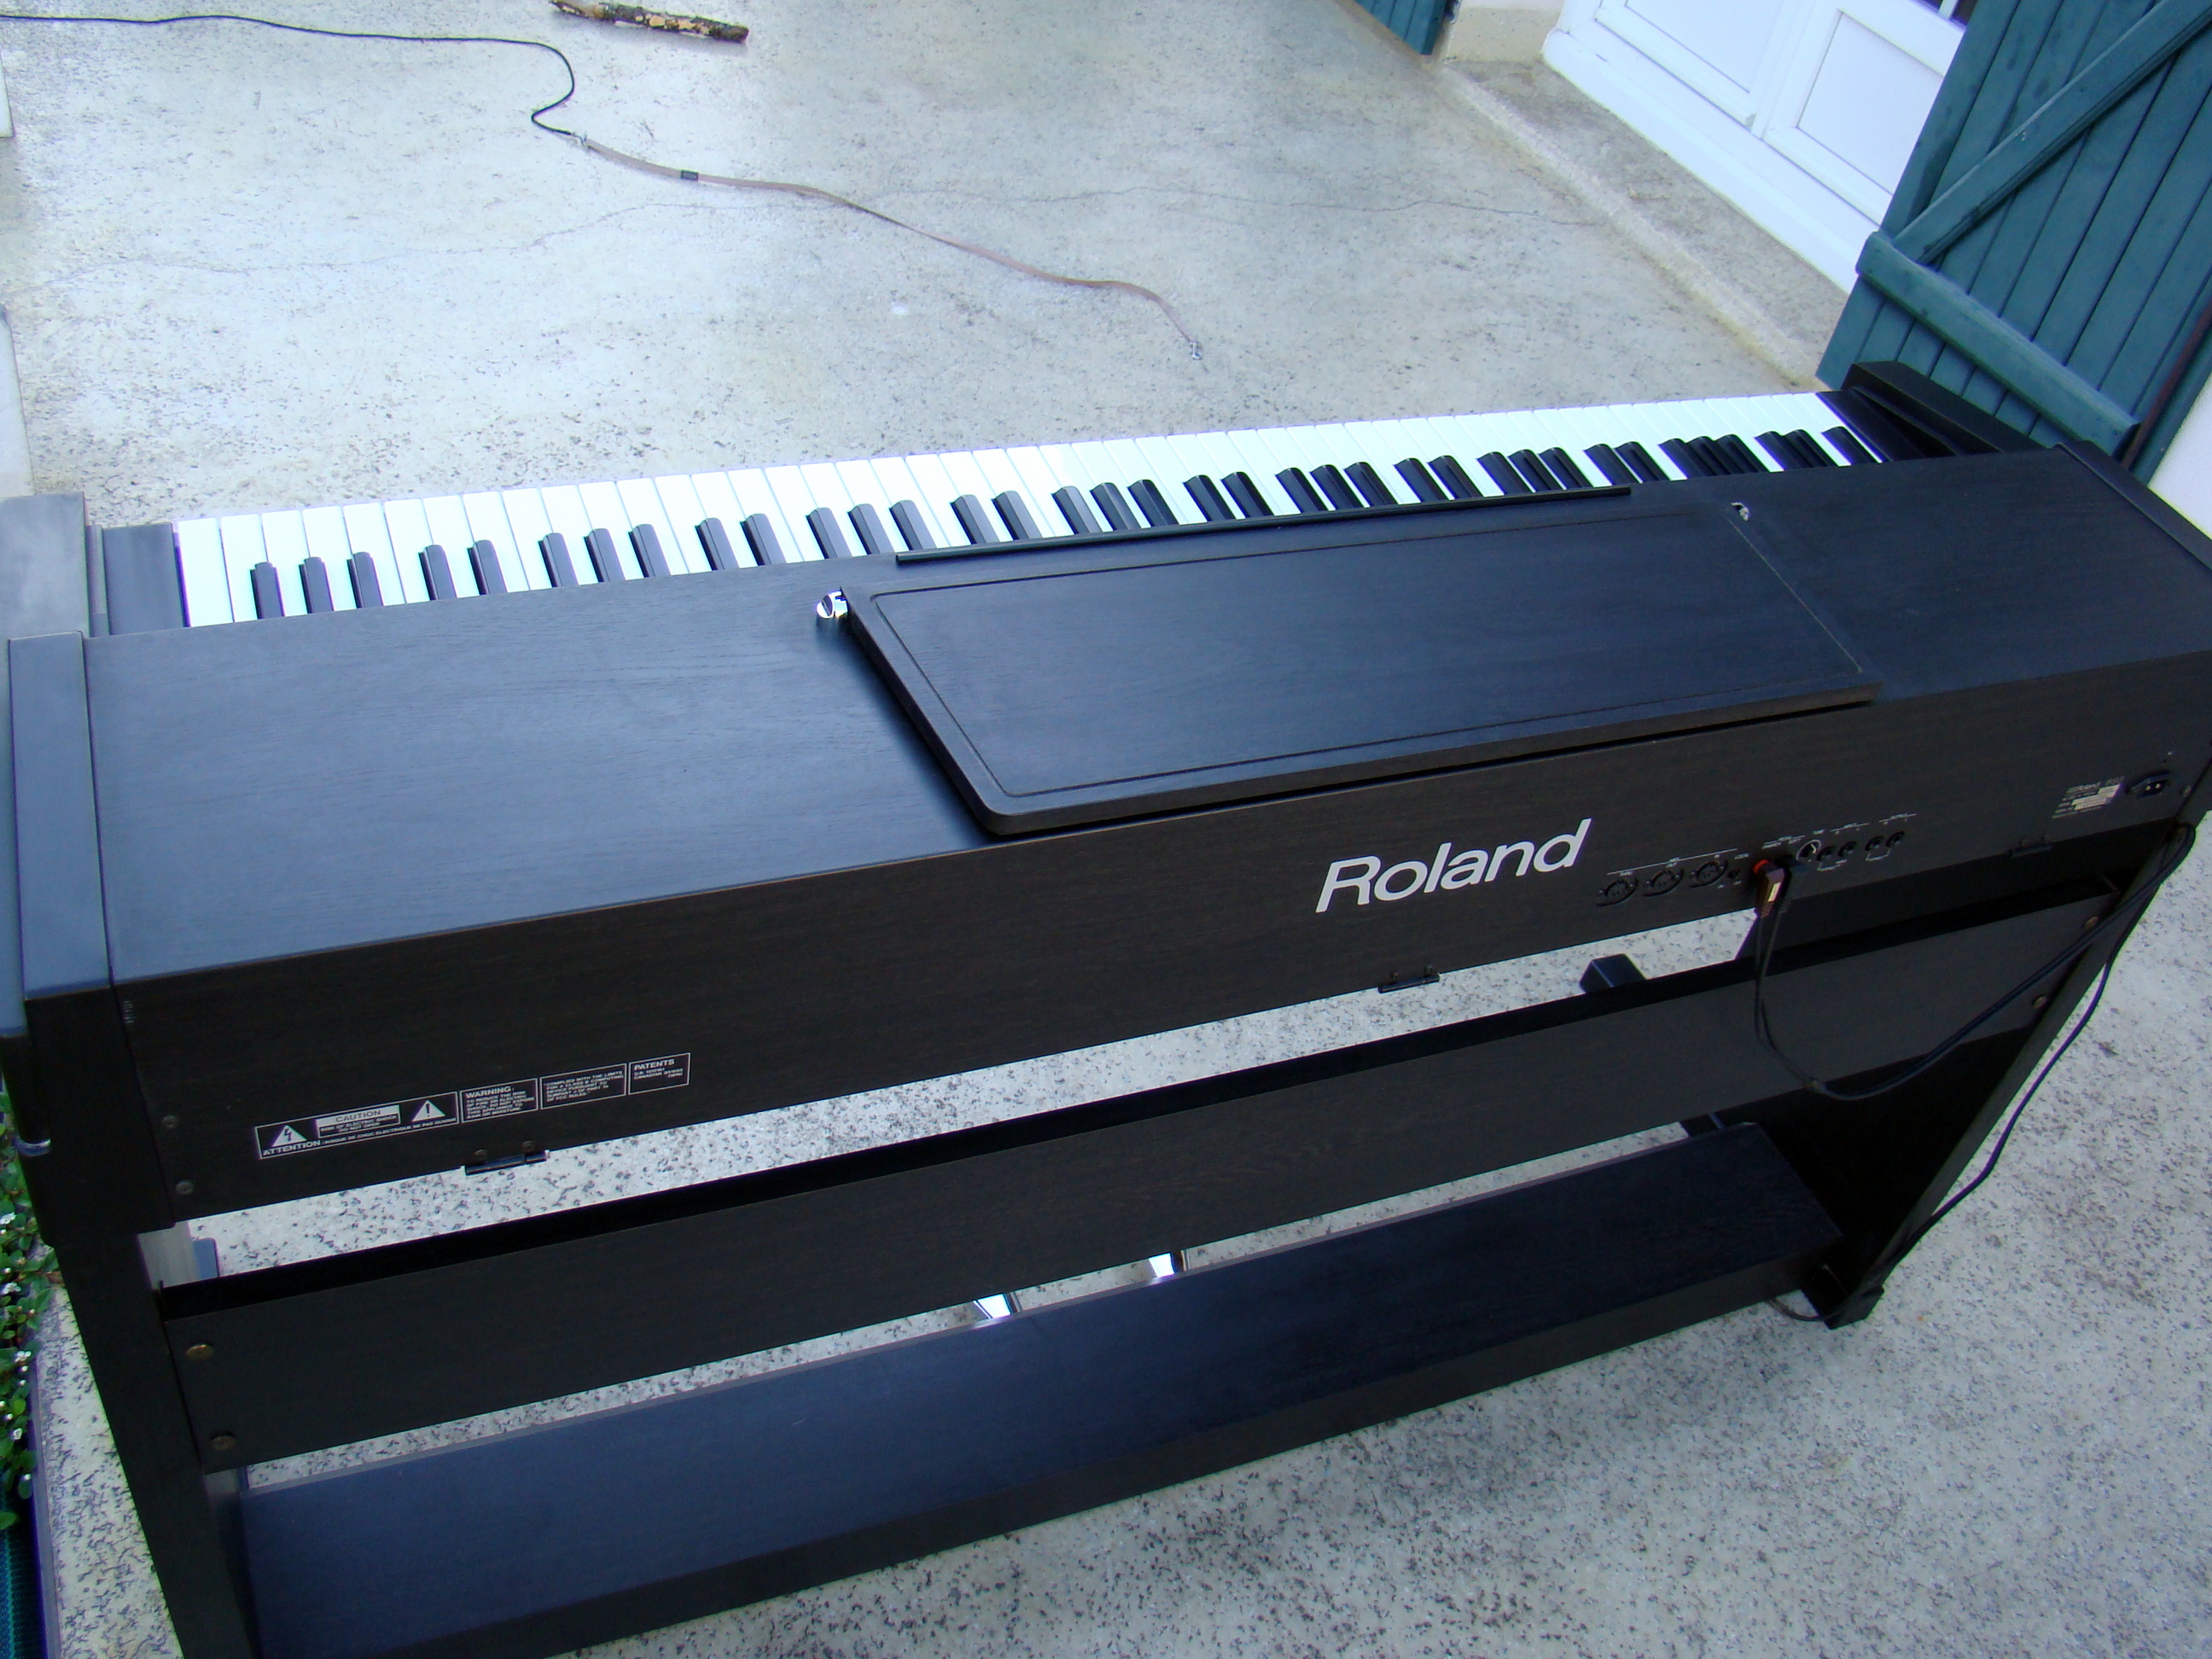 HP1700 - Roland HP1700 - Audiofanzine